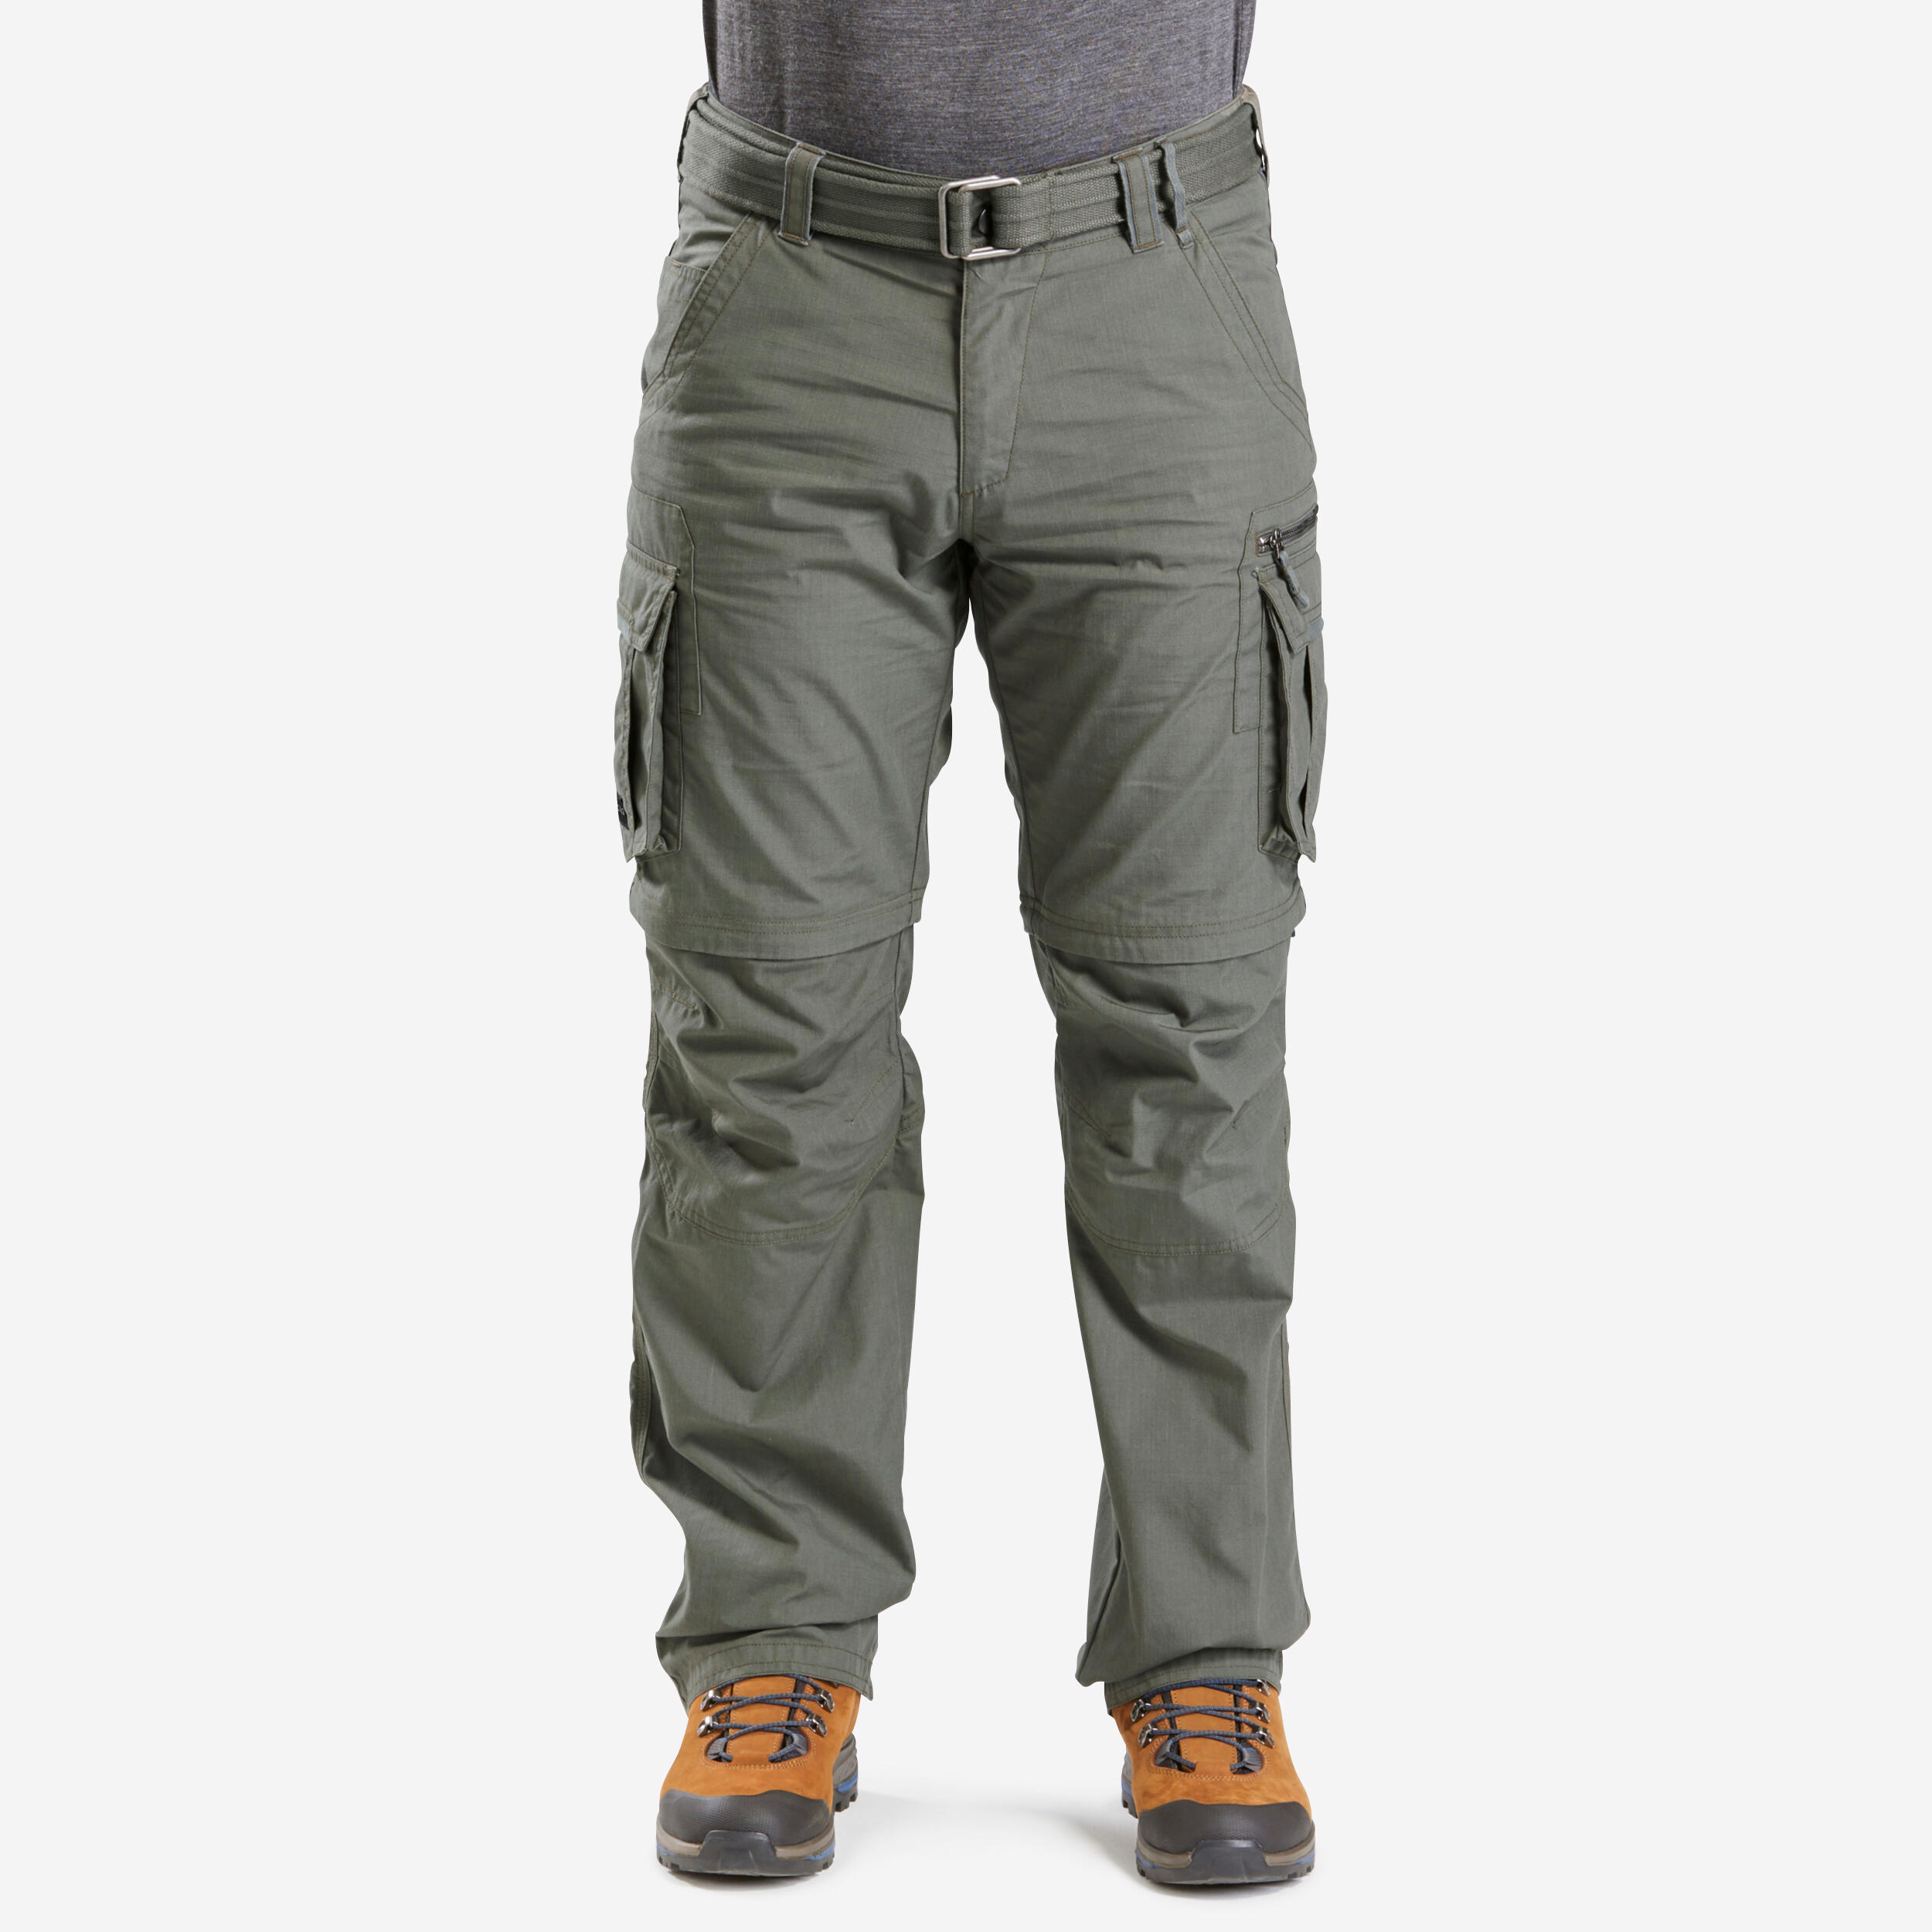 Men's Convertible Pants, Durable Zip Off Cargo Combat Trousers Shorts | eBay